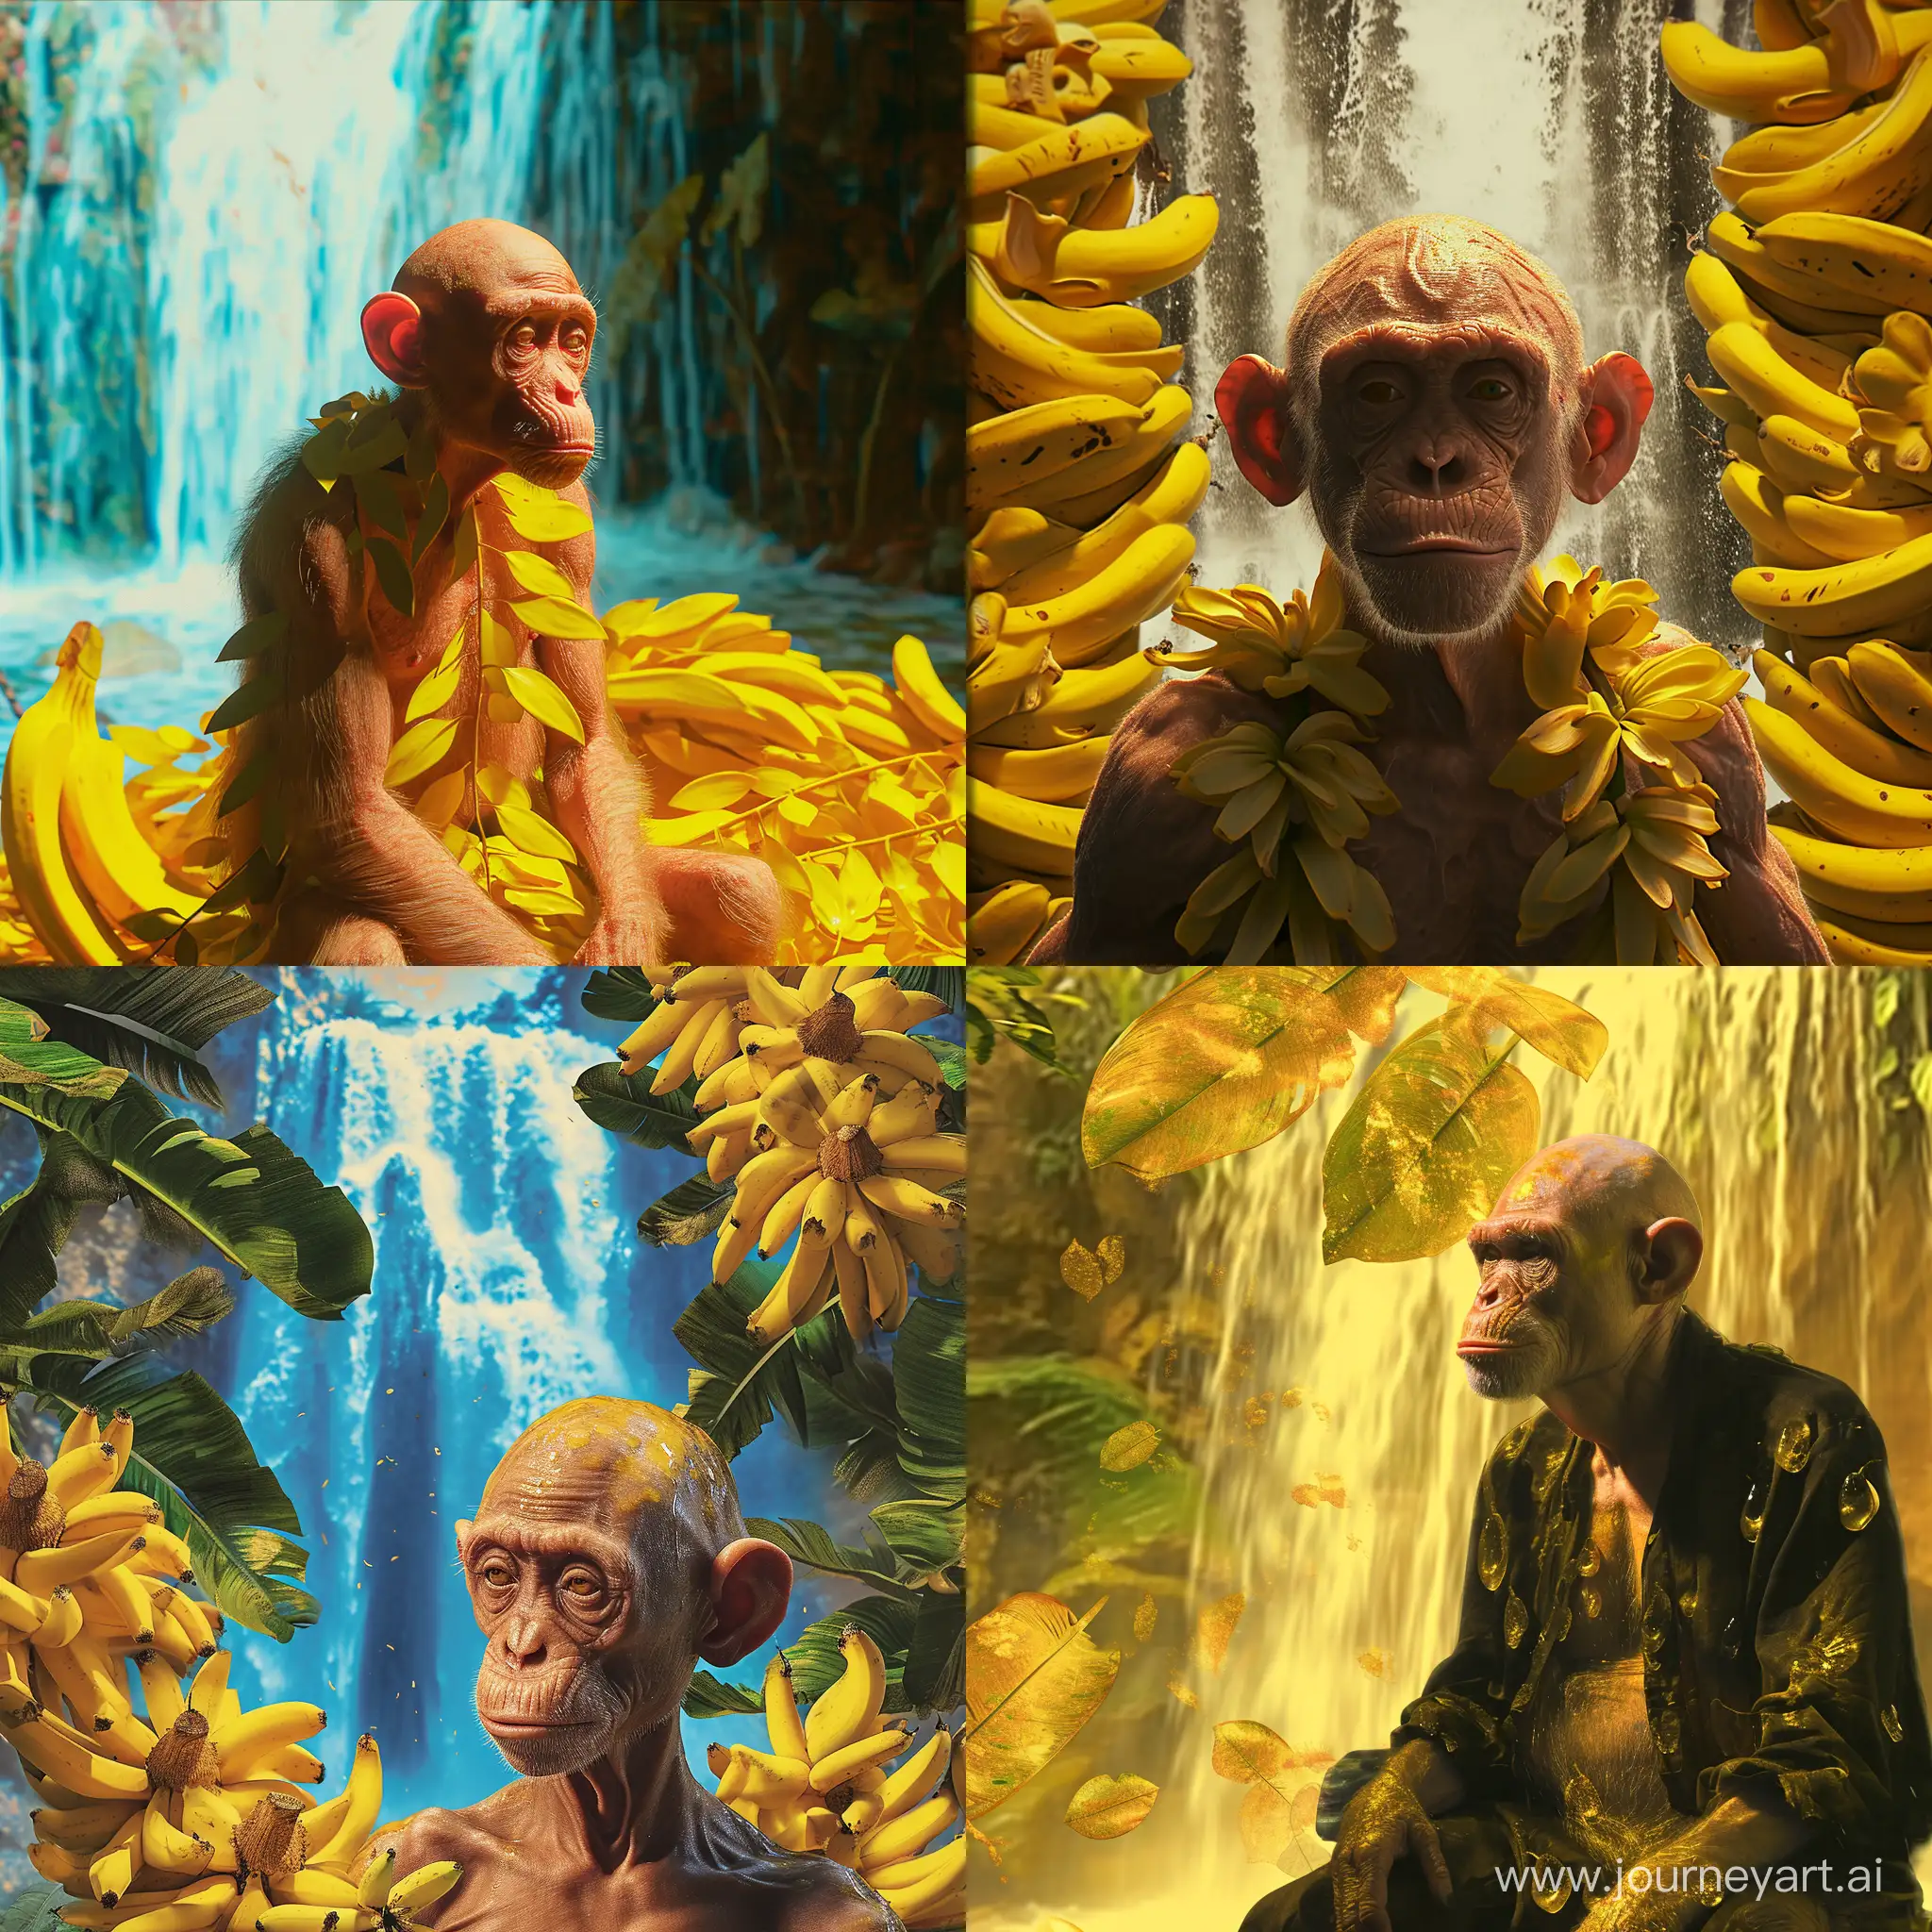 Surreal-Holographic-Monkey-Amidst-Banana-Waterfall